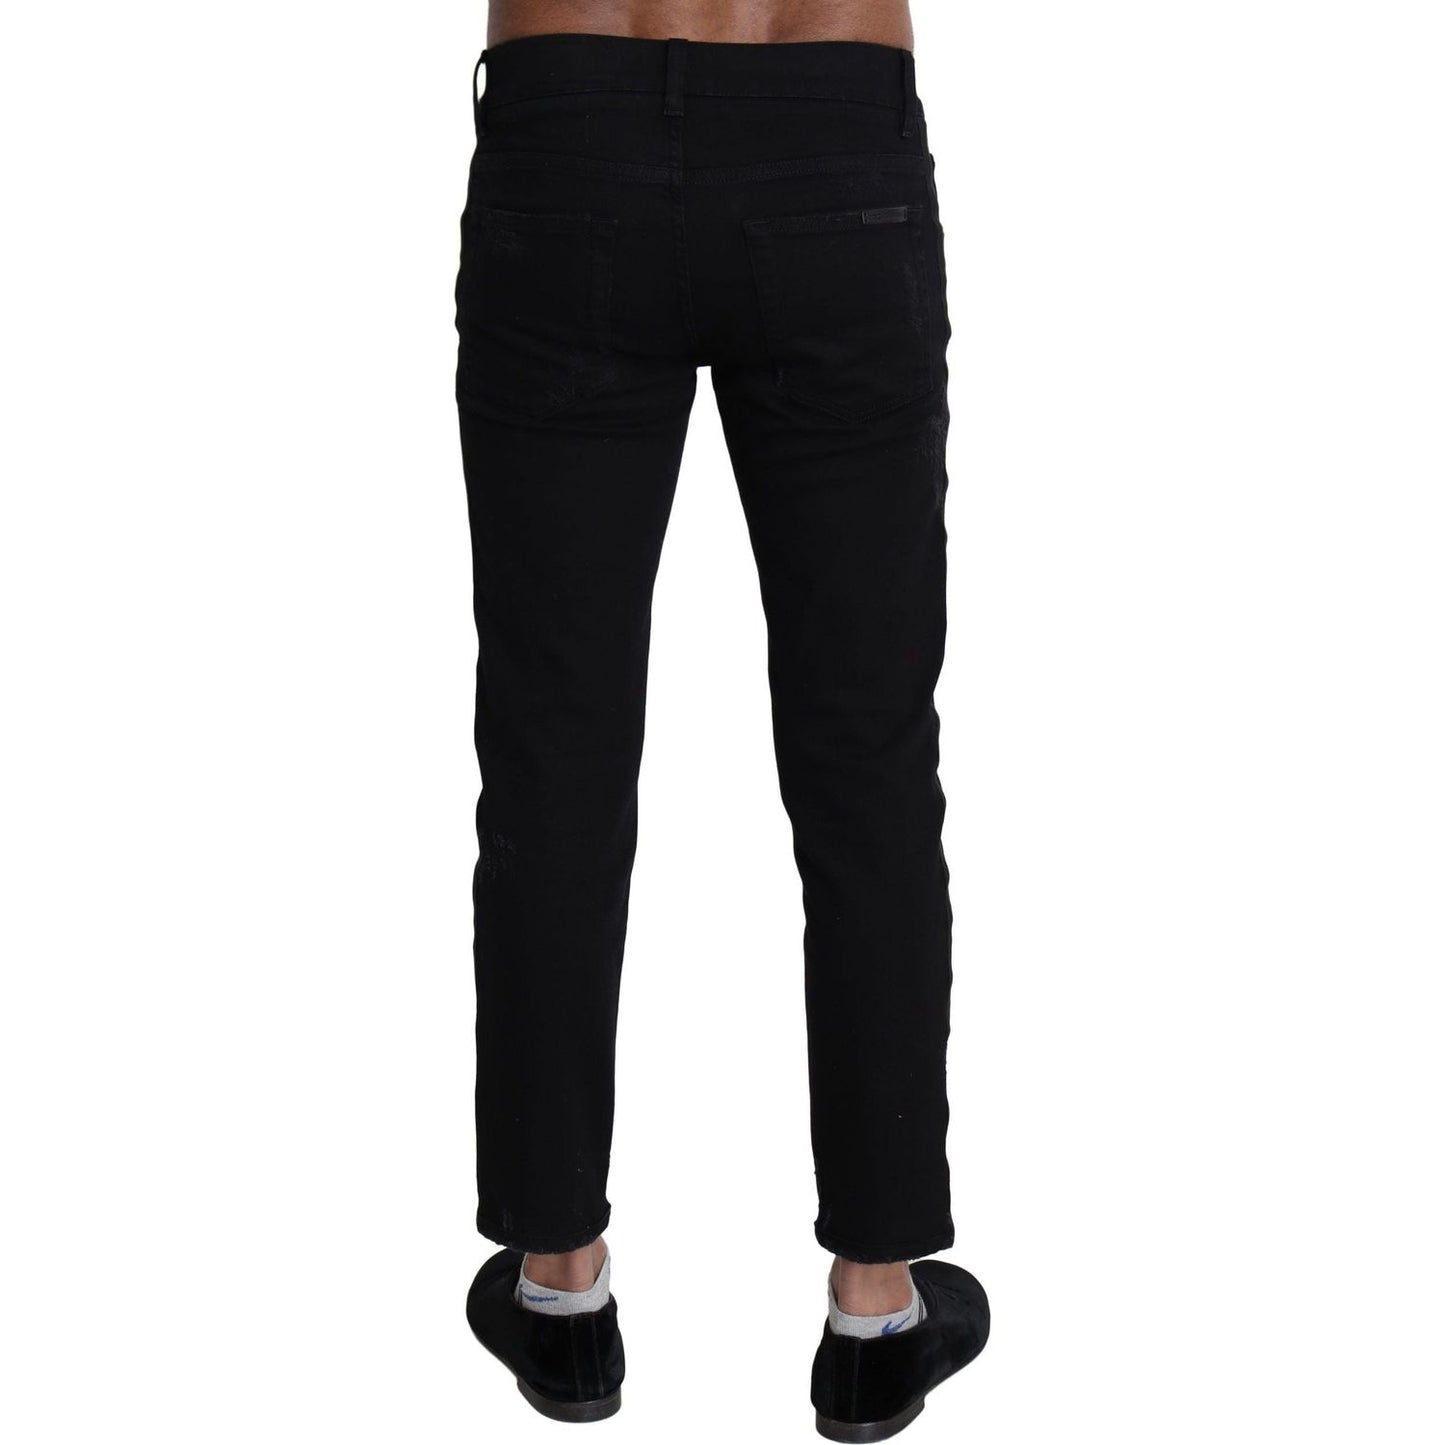 Dolce & Gabbana Elegant Skinny Black Jeans with Embroidery black-heraldic-embroidery-skinny-denim-jeans Jeans & Pants IMG_4771-scaled-6efecf6e-2e6.jpg